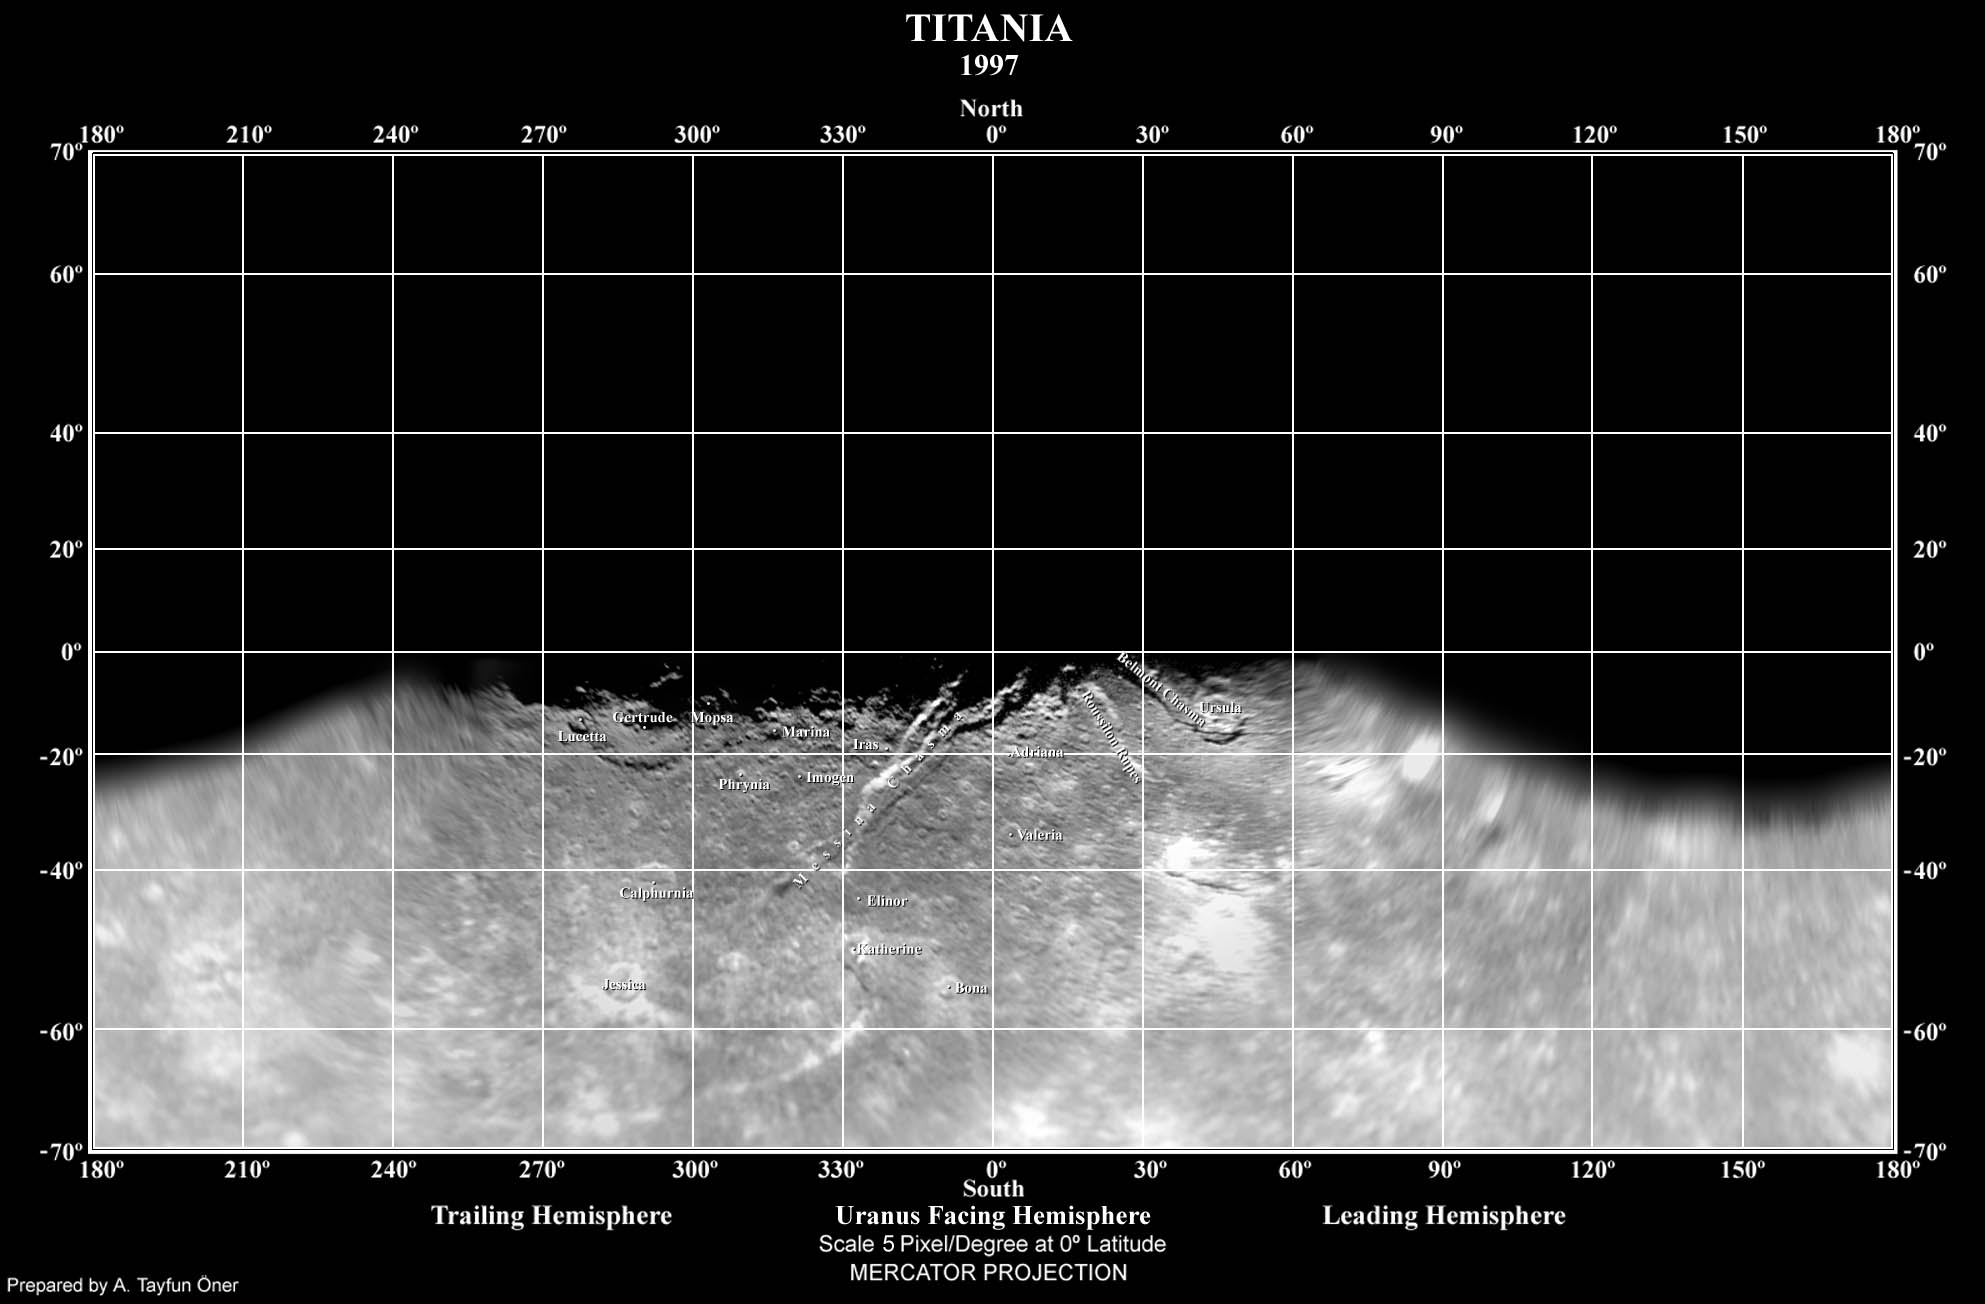 http://www.solarviews.com/raw/uranus/titamap2.jpg